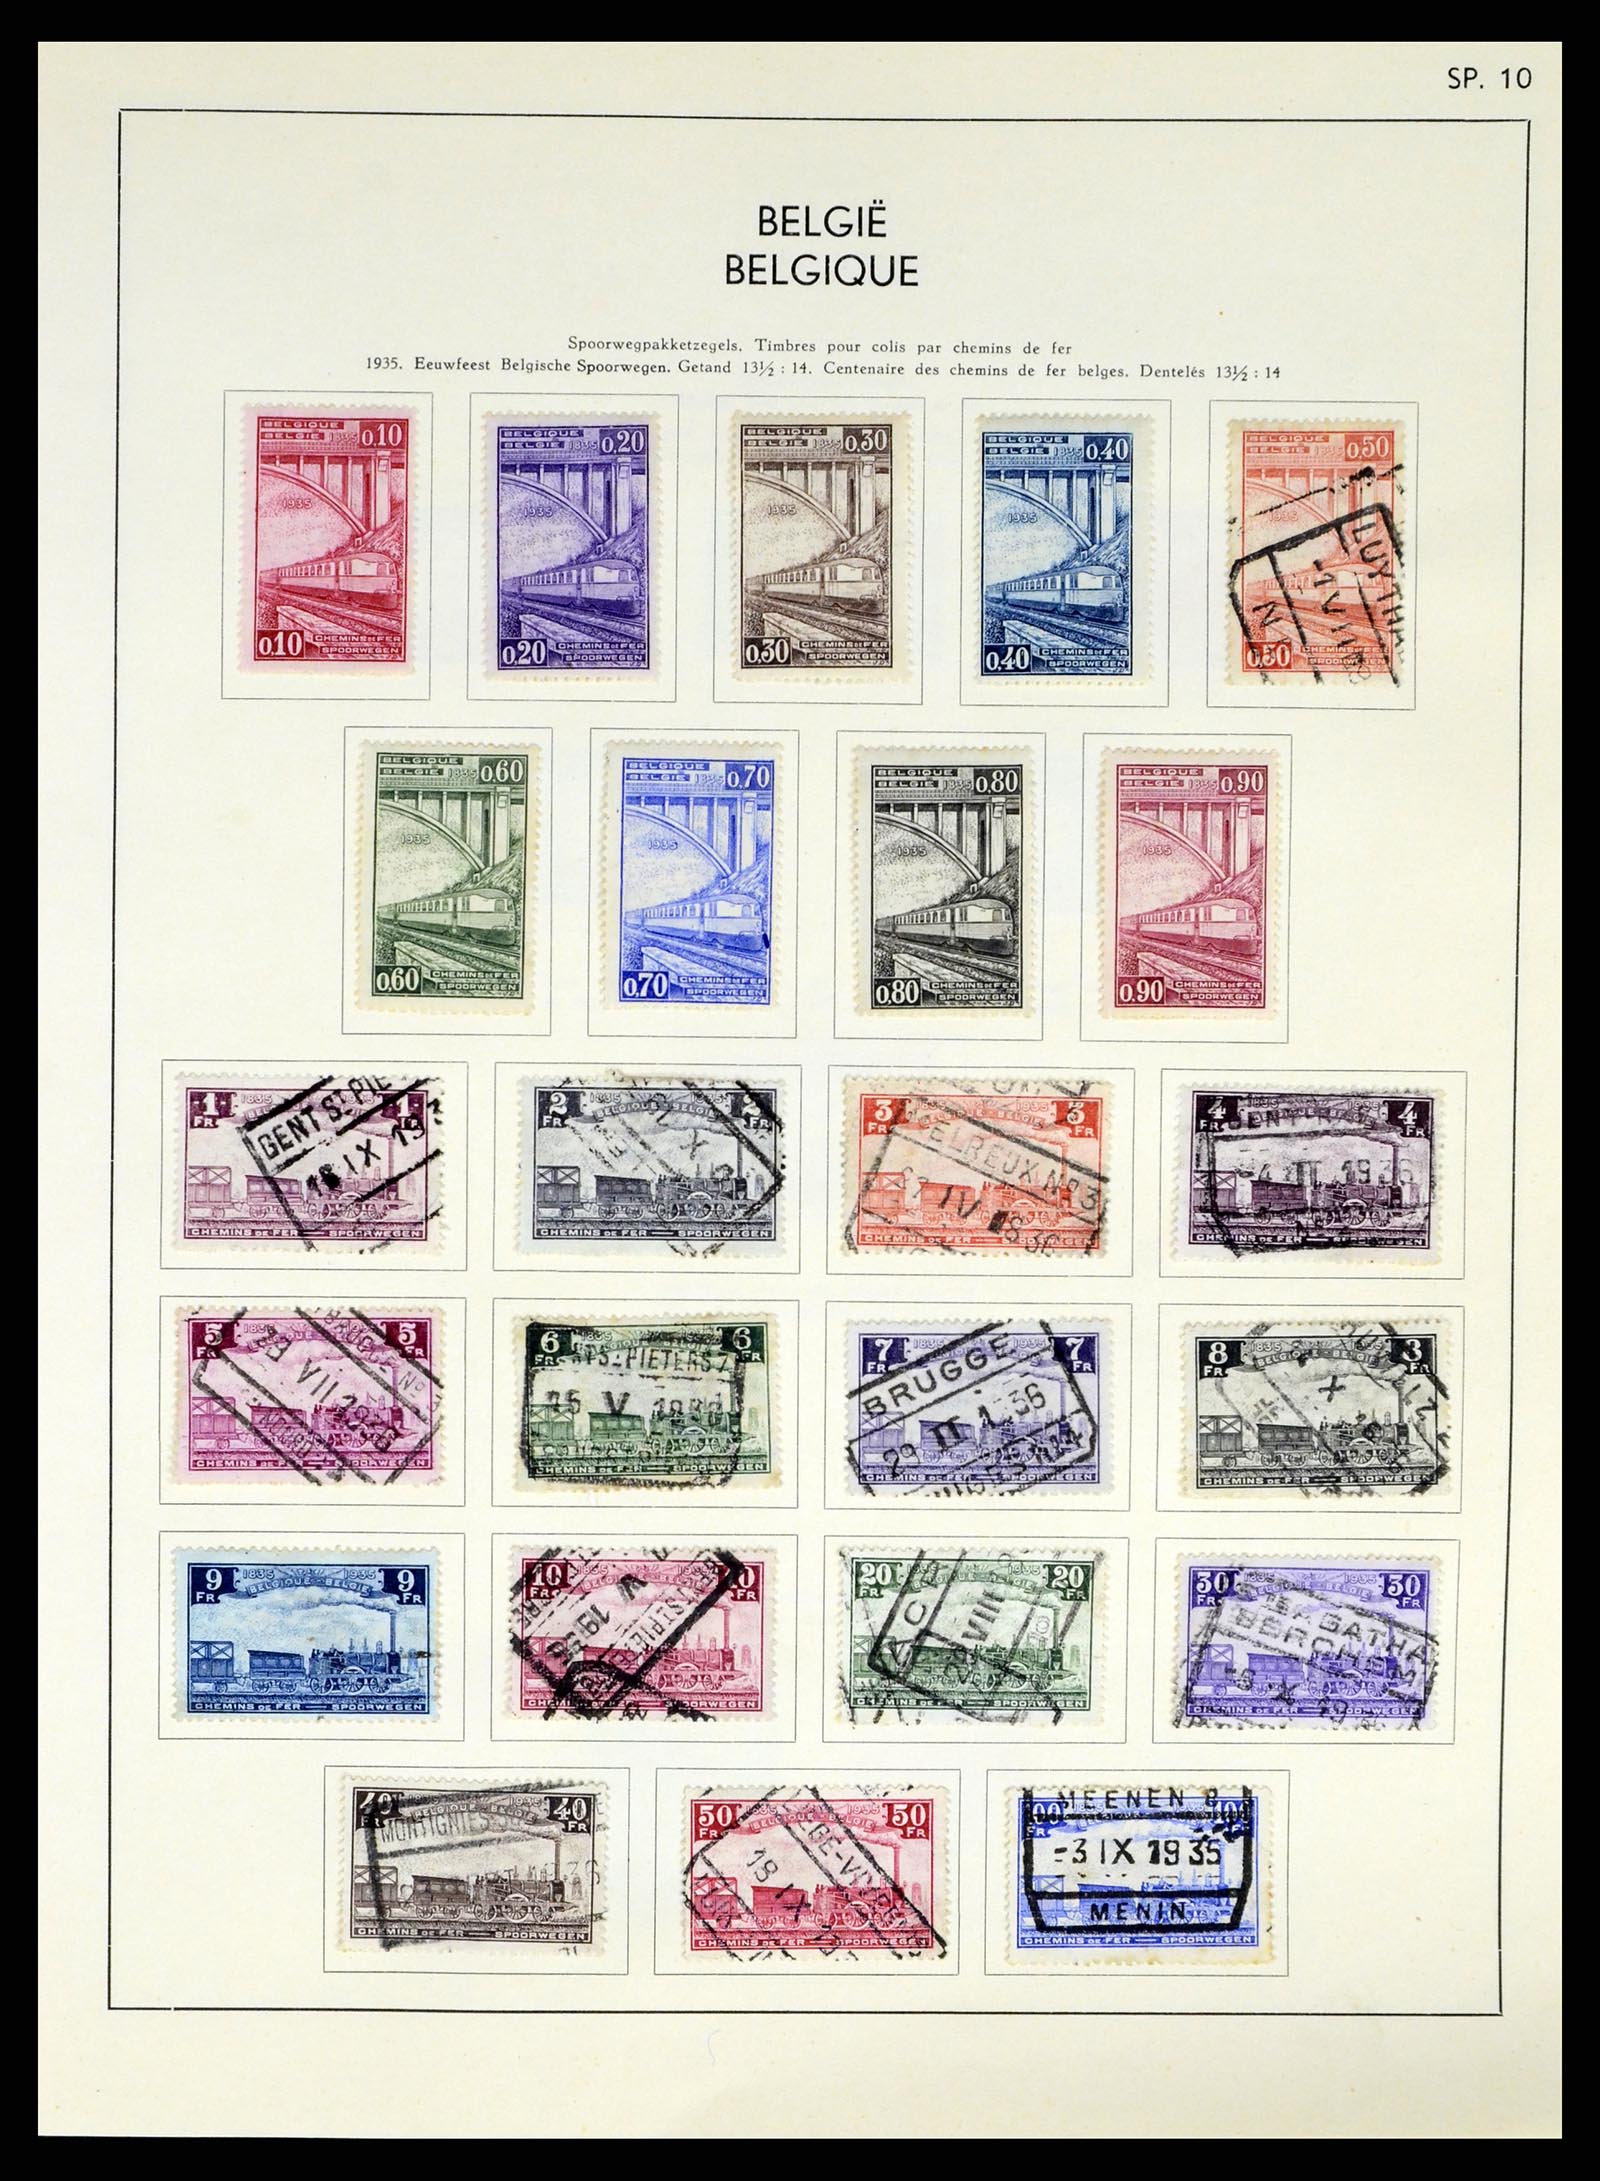 37959 143 - Stamp Collection 37959 Belgium and Belgian Congo 1849-1960.